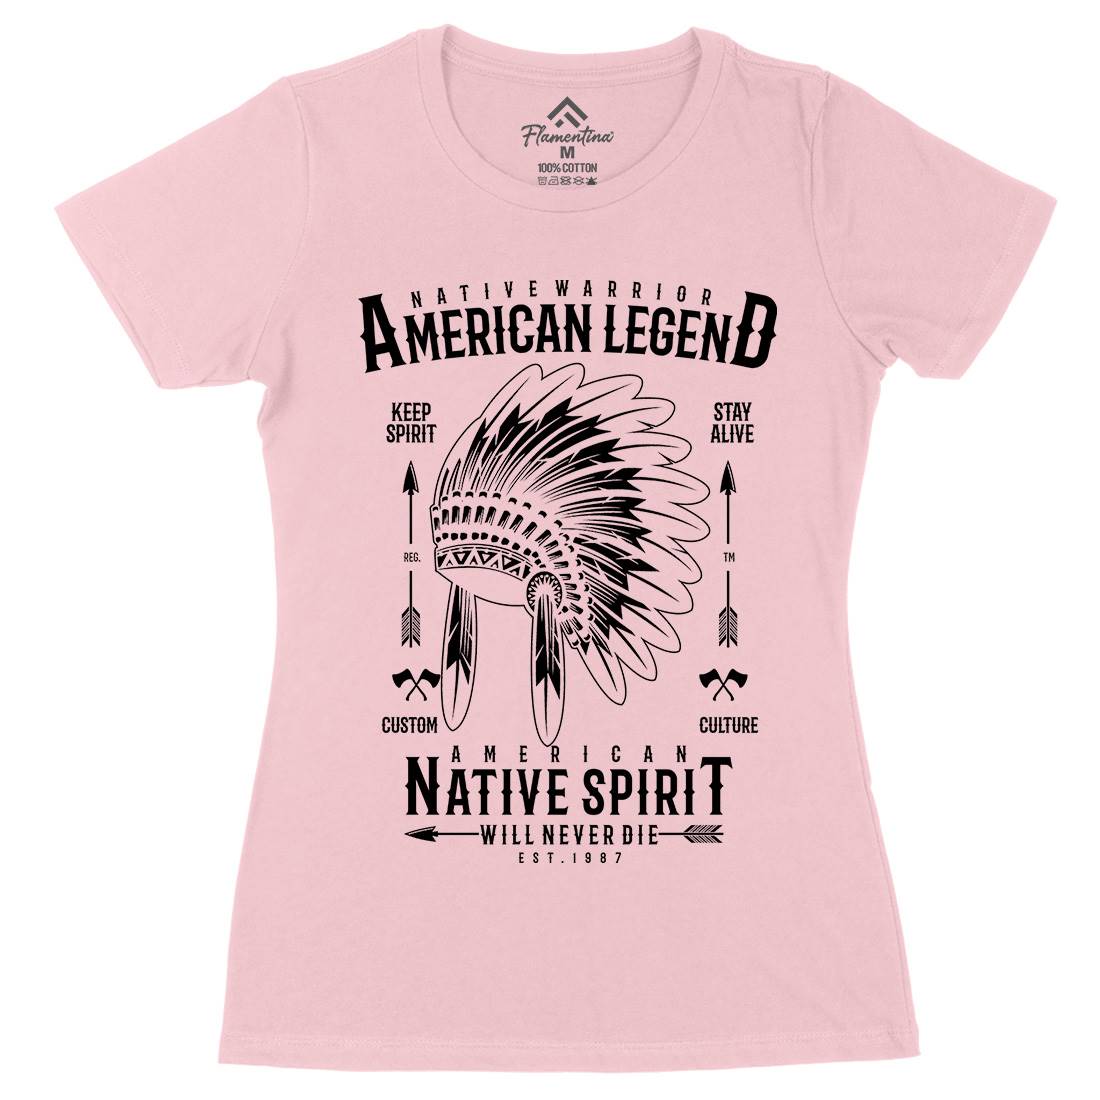 Native Warrior Womens Organic Crew Neck T-Shirt American A725